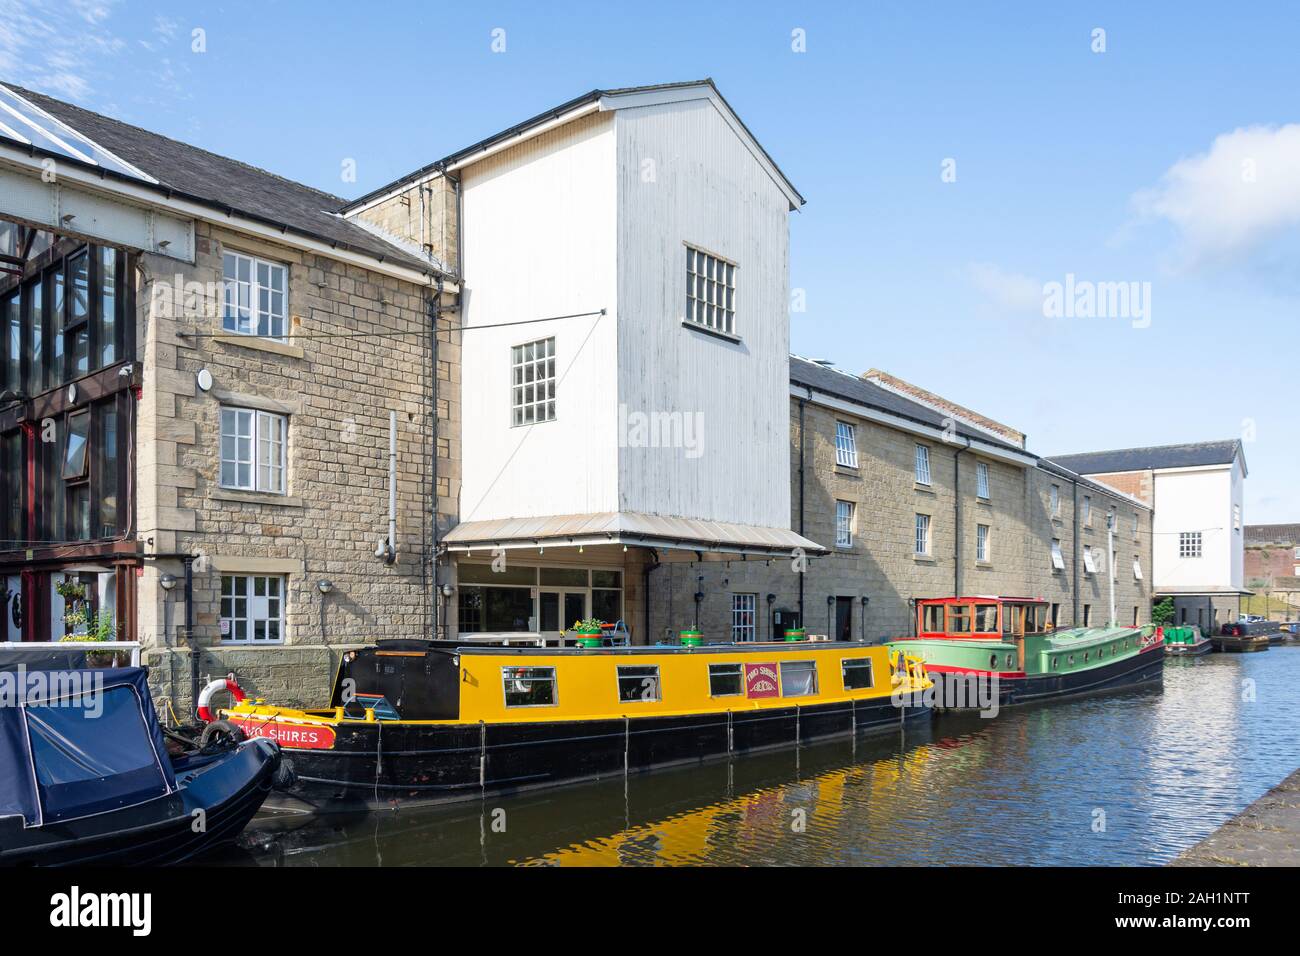 Canal boats alongside former wool warehouses, Shipley Canal, Shipley, City of Bradley, West Yorkshire, England, United Kingdom Stock Photo